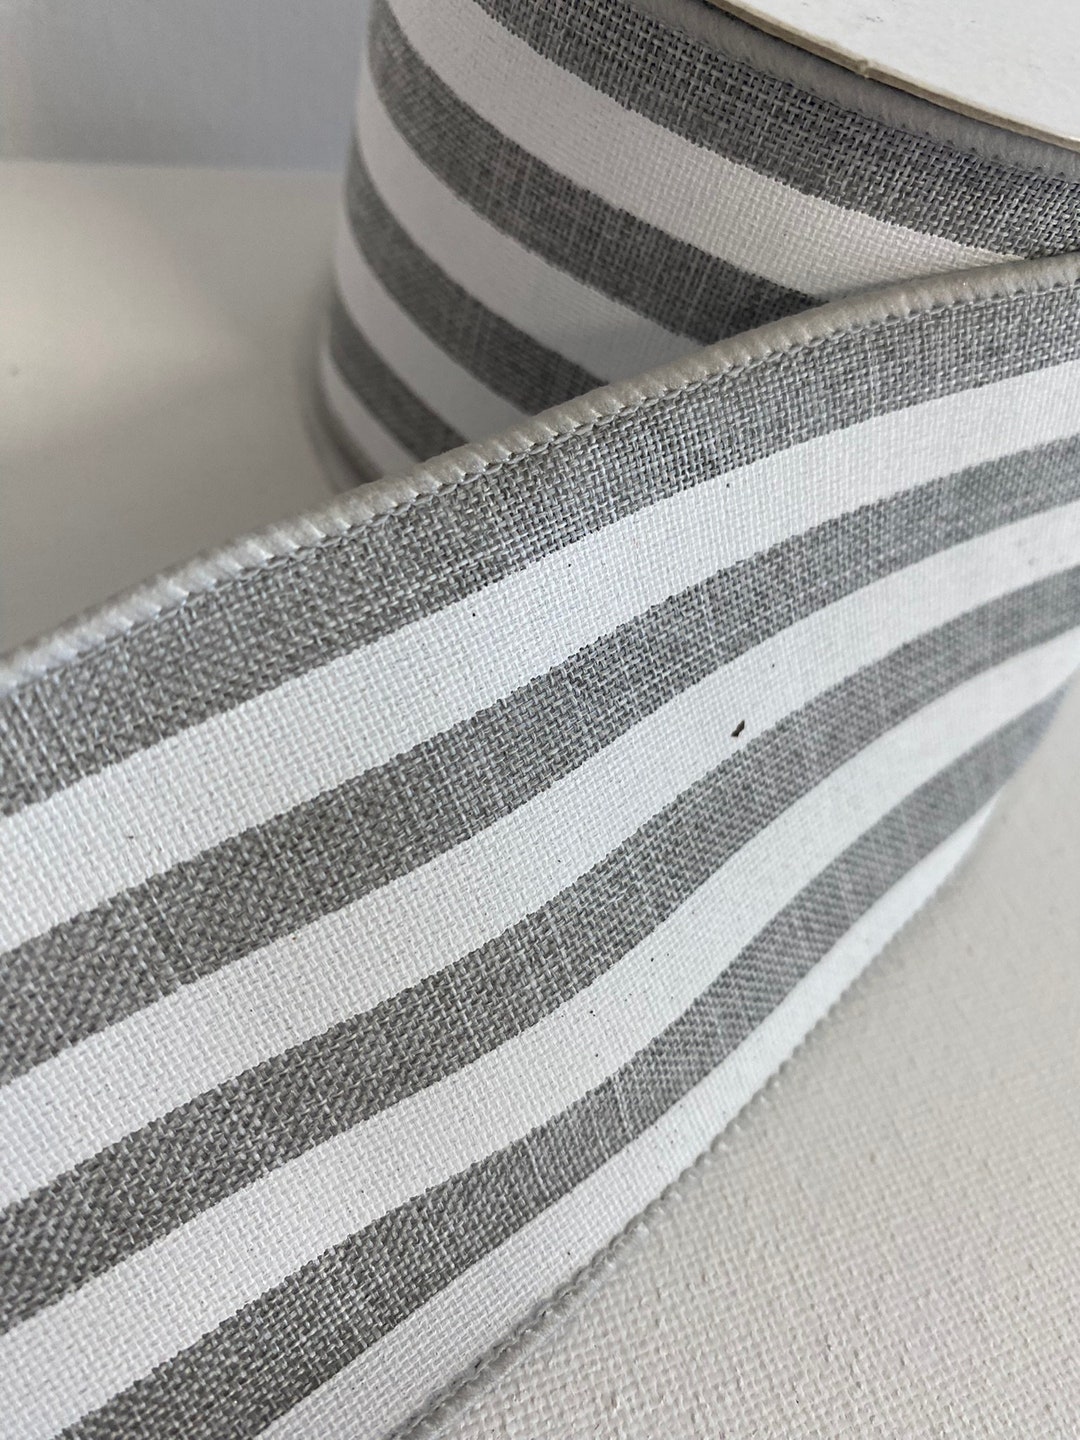 1.5x10yd Vertical Stripe Ribbon Light Beige/ White